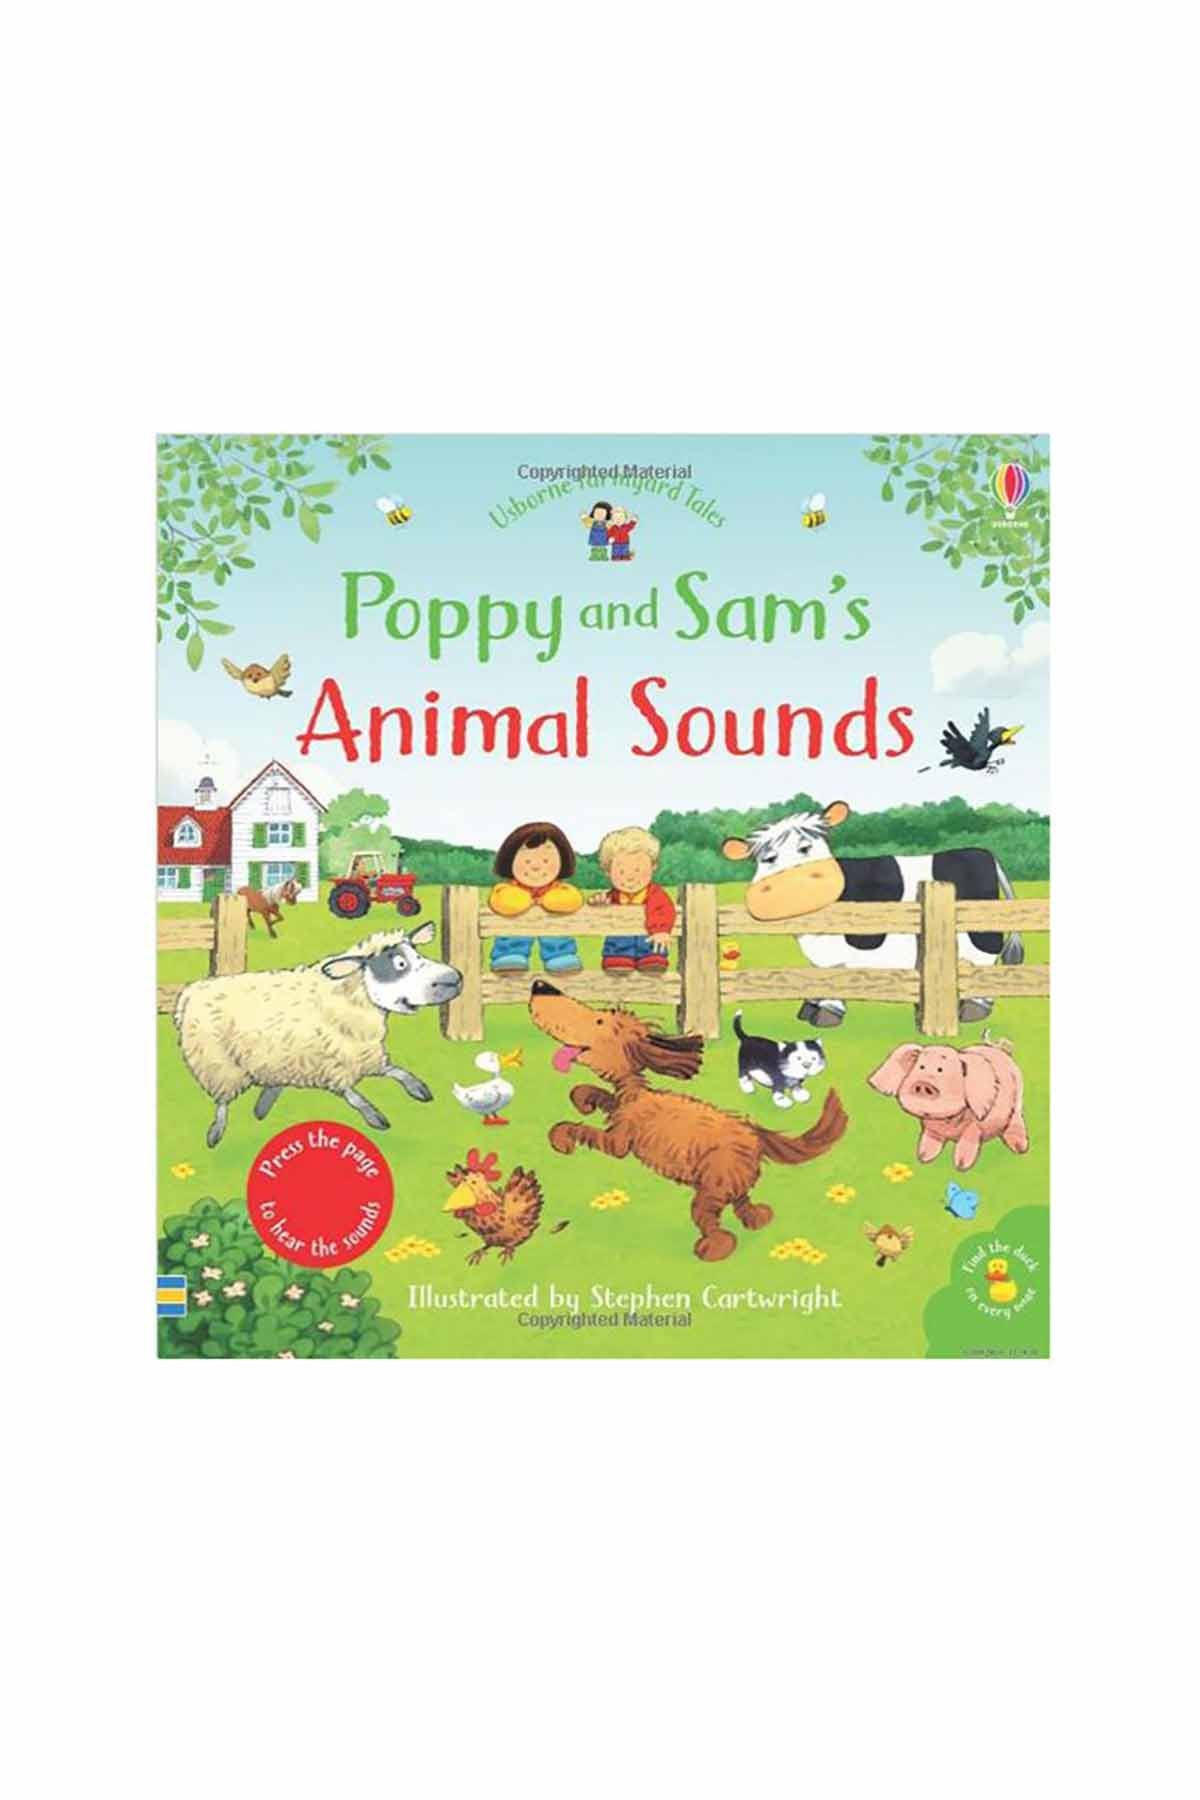 The Usborne -Poppy and Sam's Animal Sounds